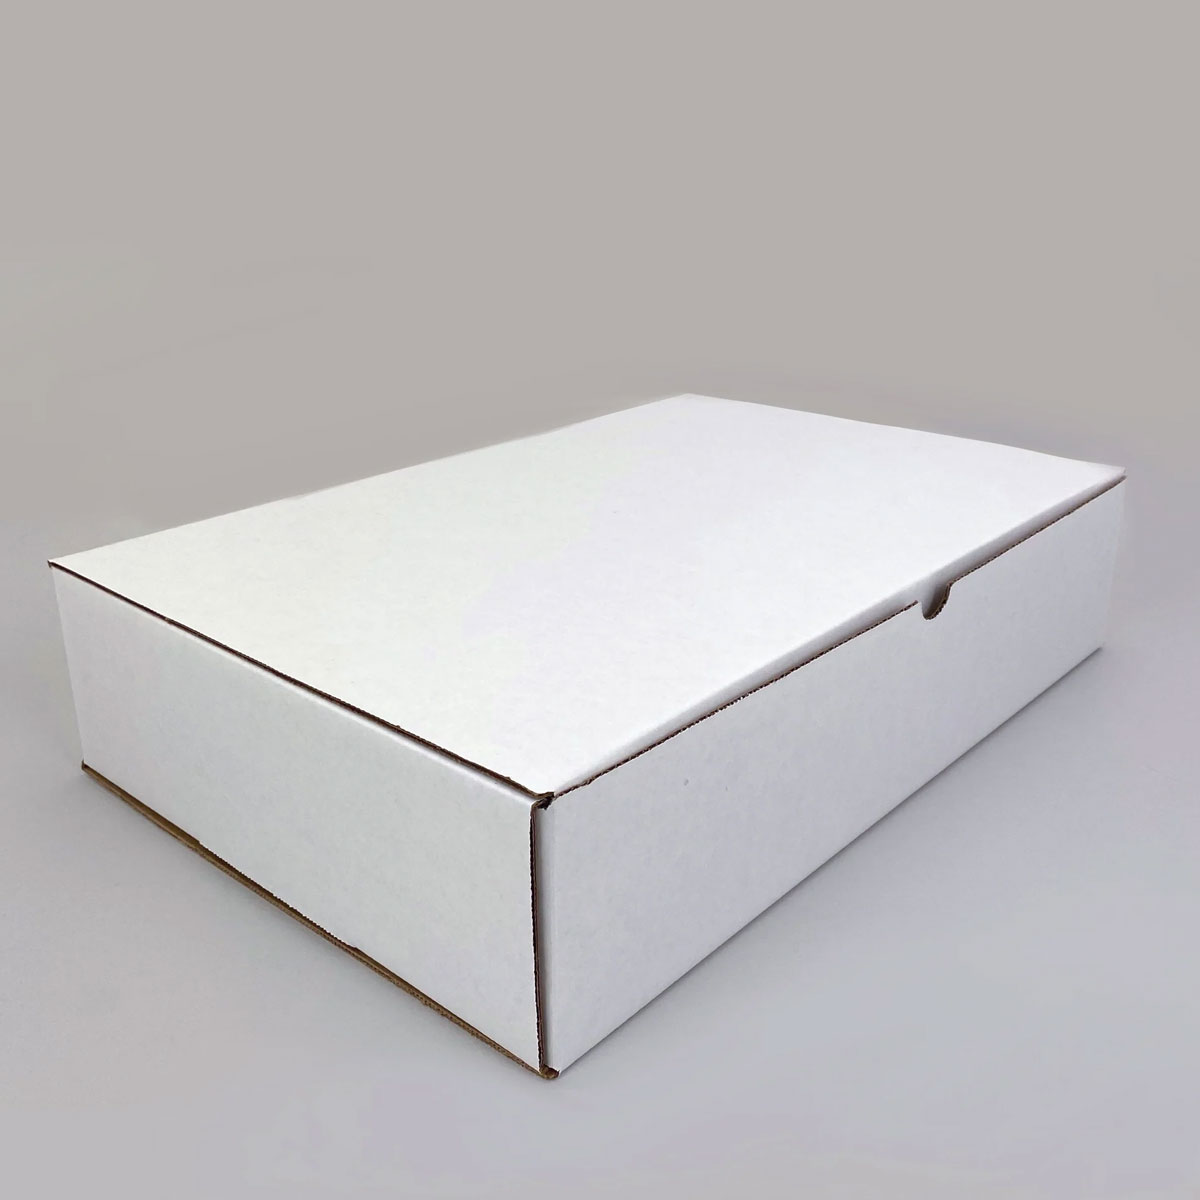 White-Shipping-Boxes